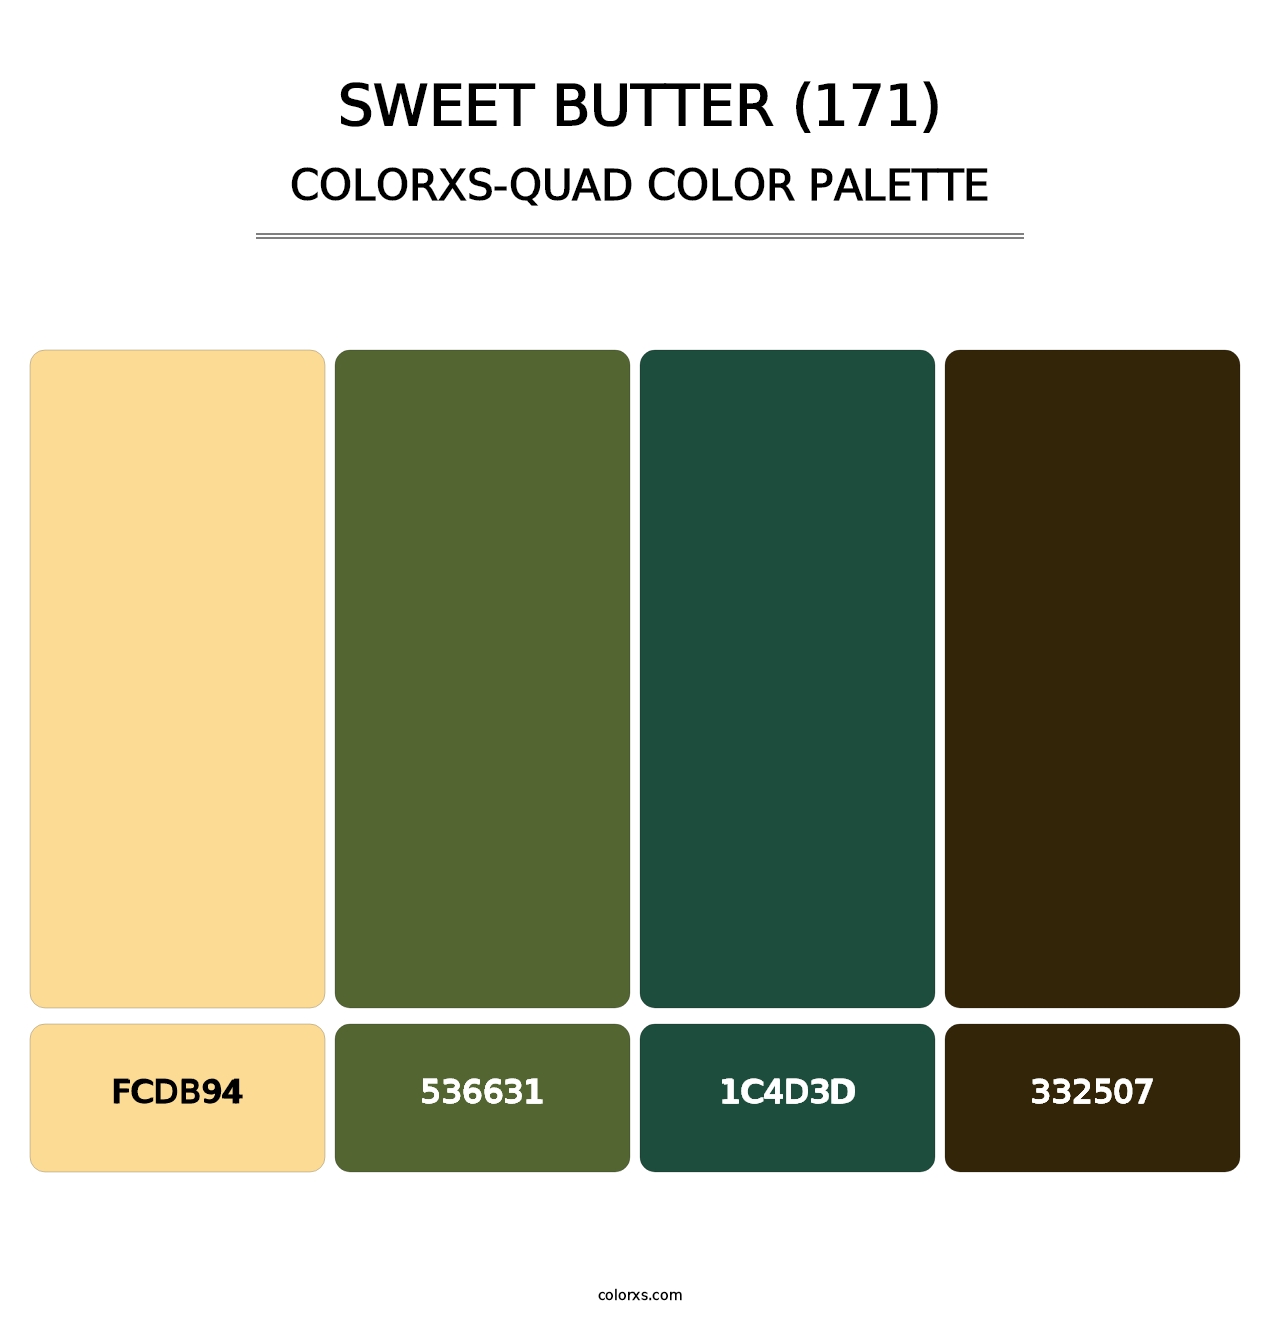 Sweet Butter (171) - Colorxs Quad Palette